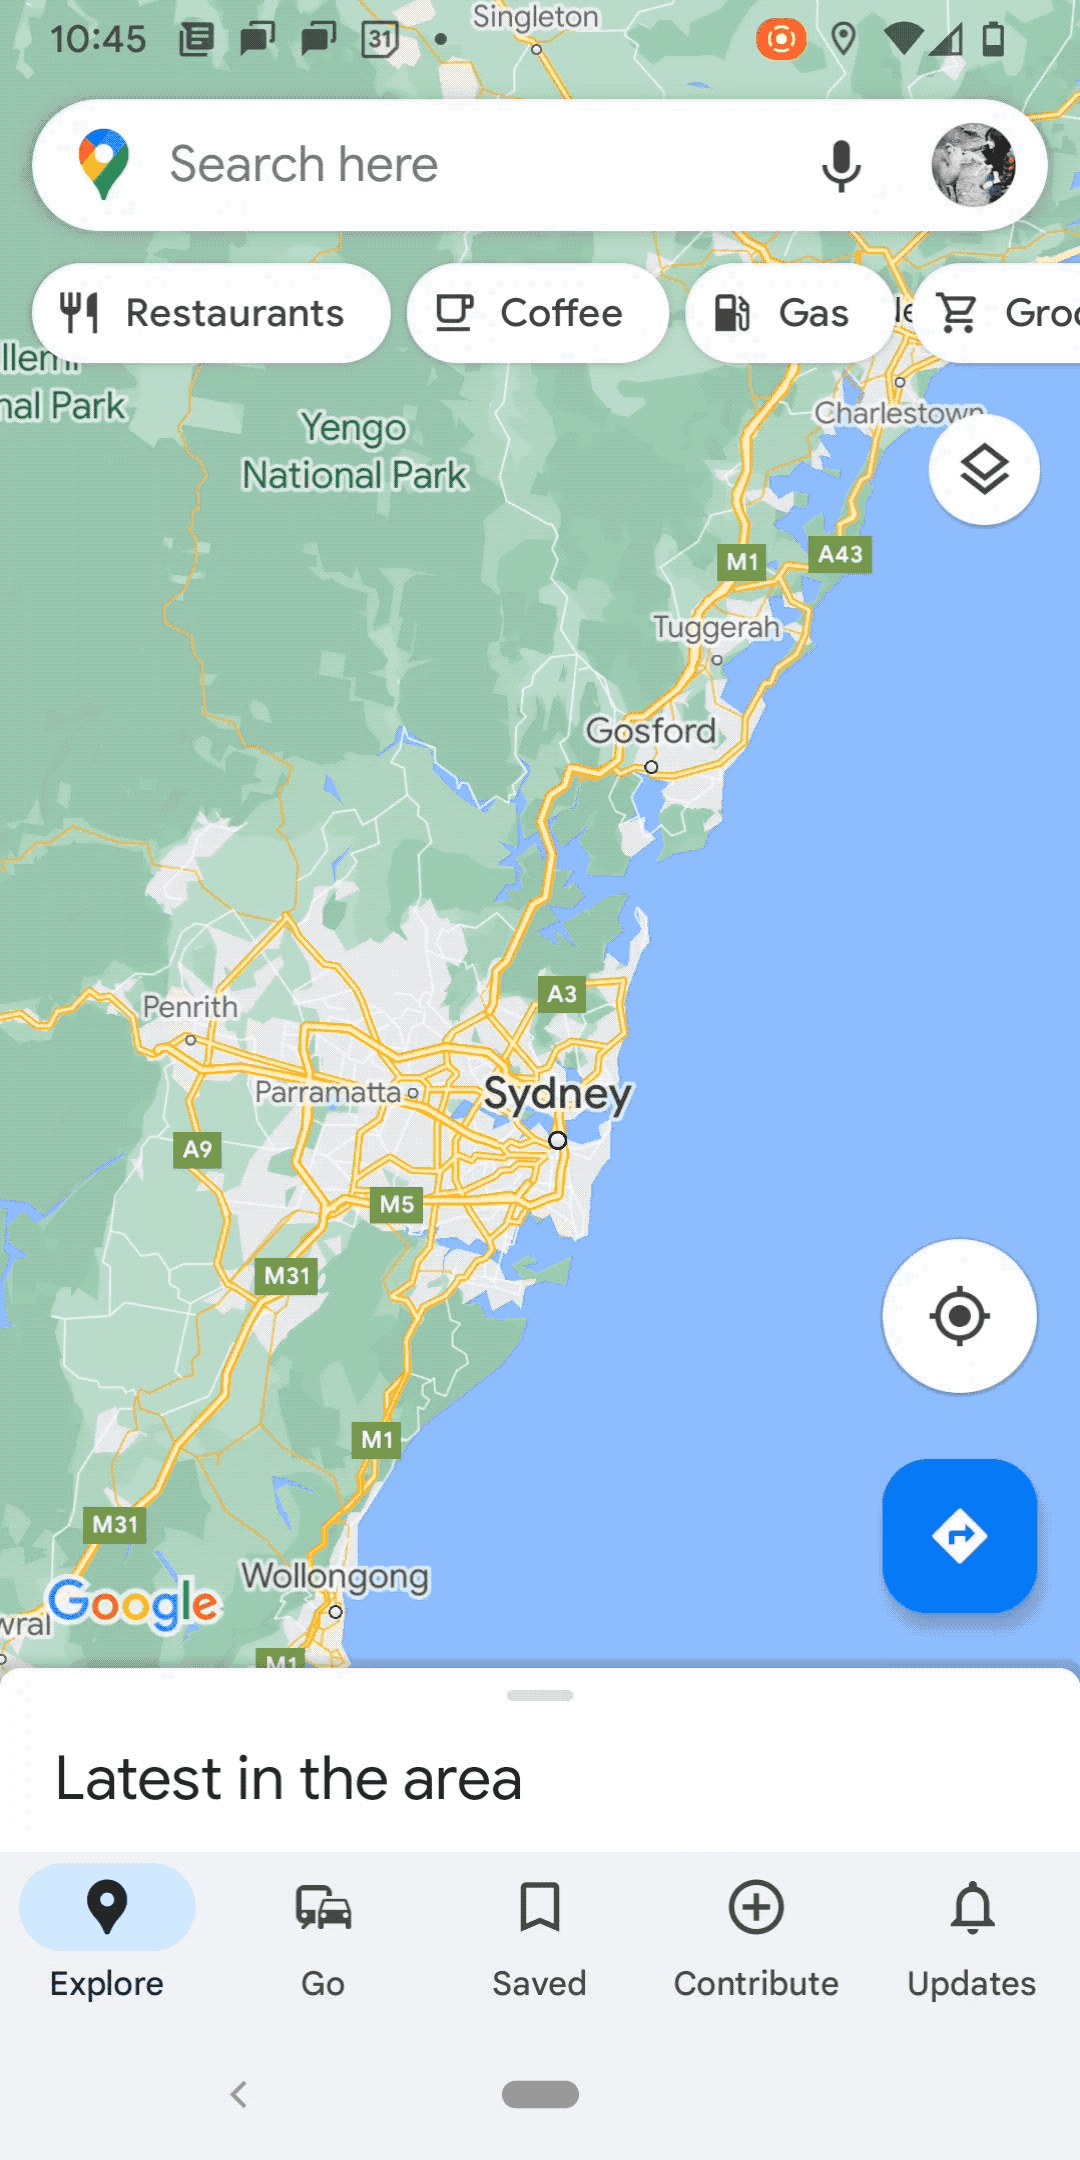 Google Makes Navigating Australian Bushfire Season a Little Easier With New Maps Feature